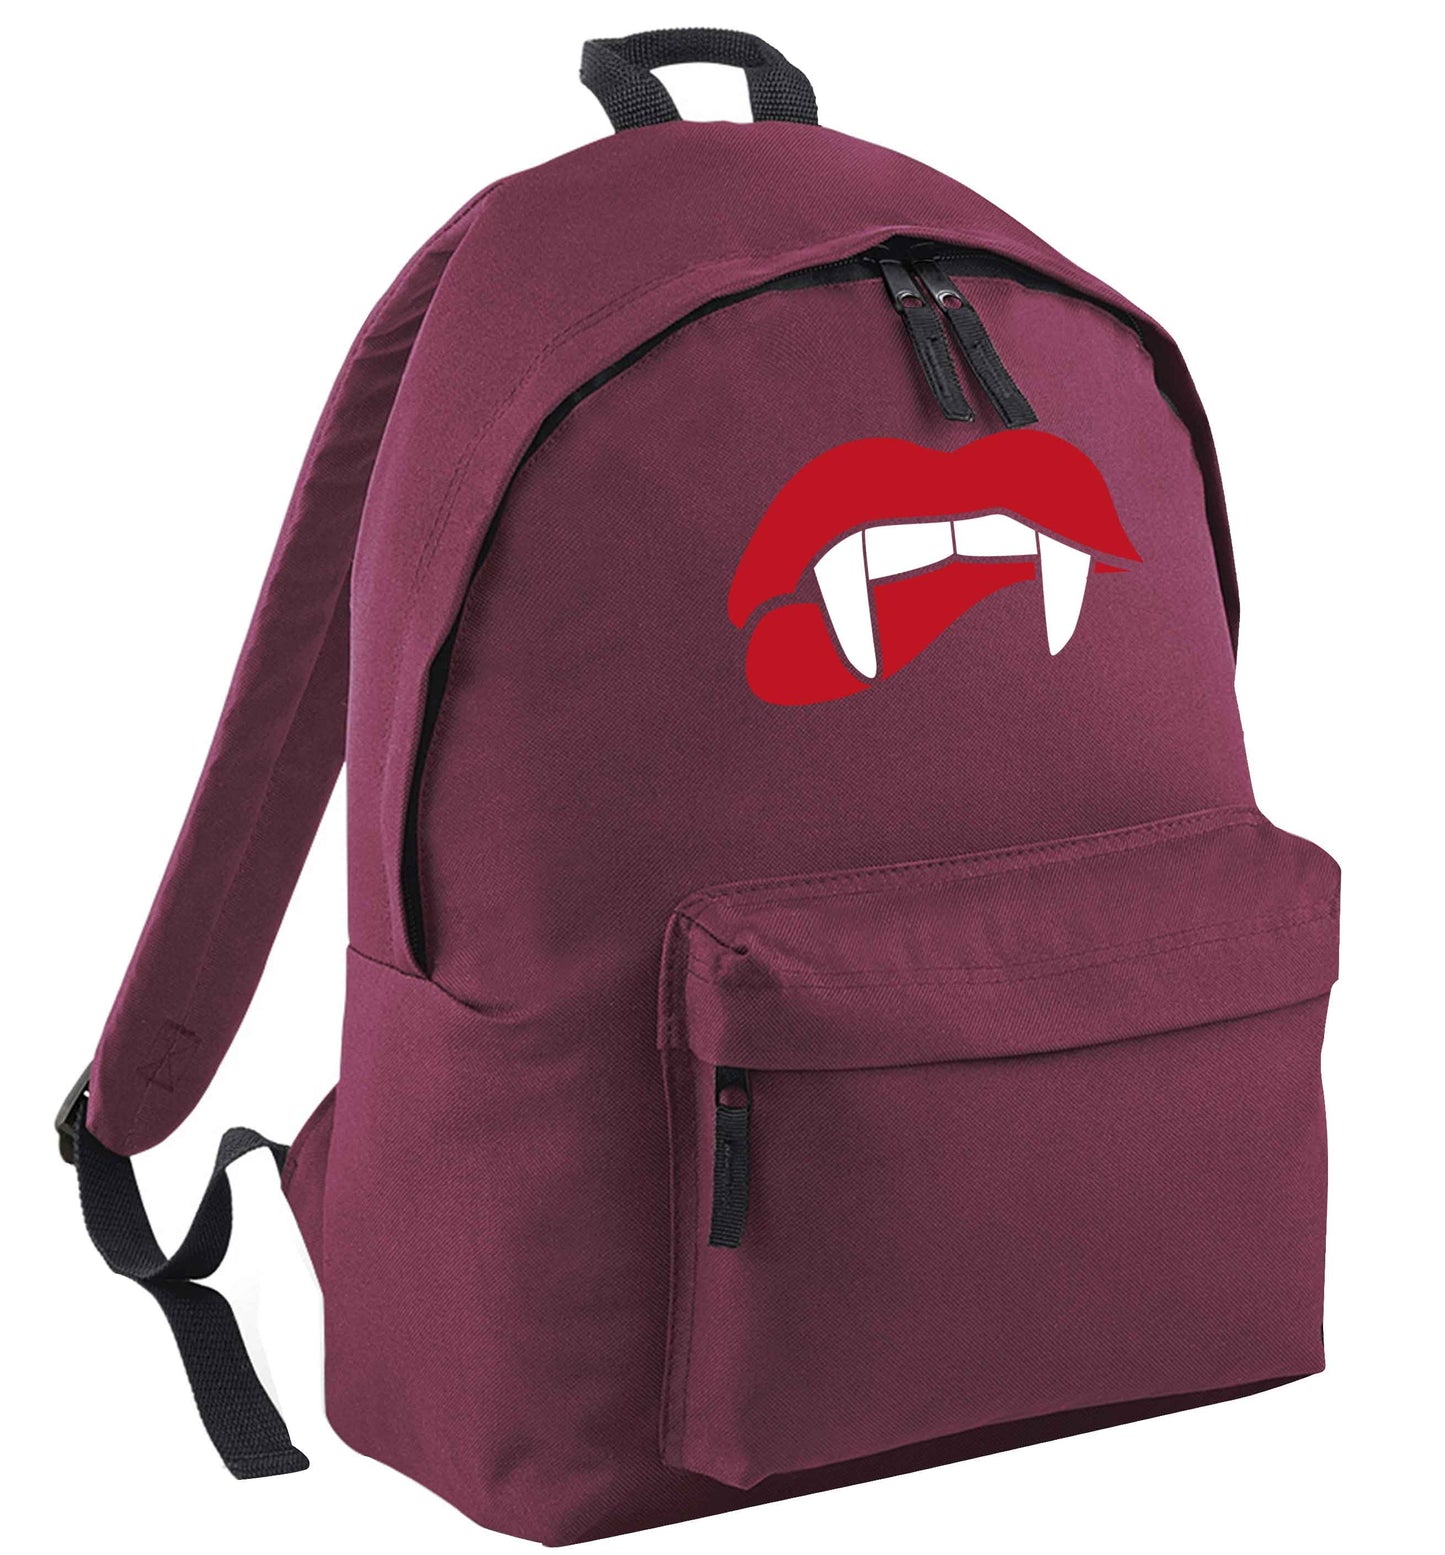 Vampire fangs maroon adults backpack